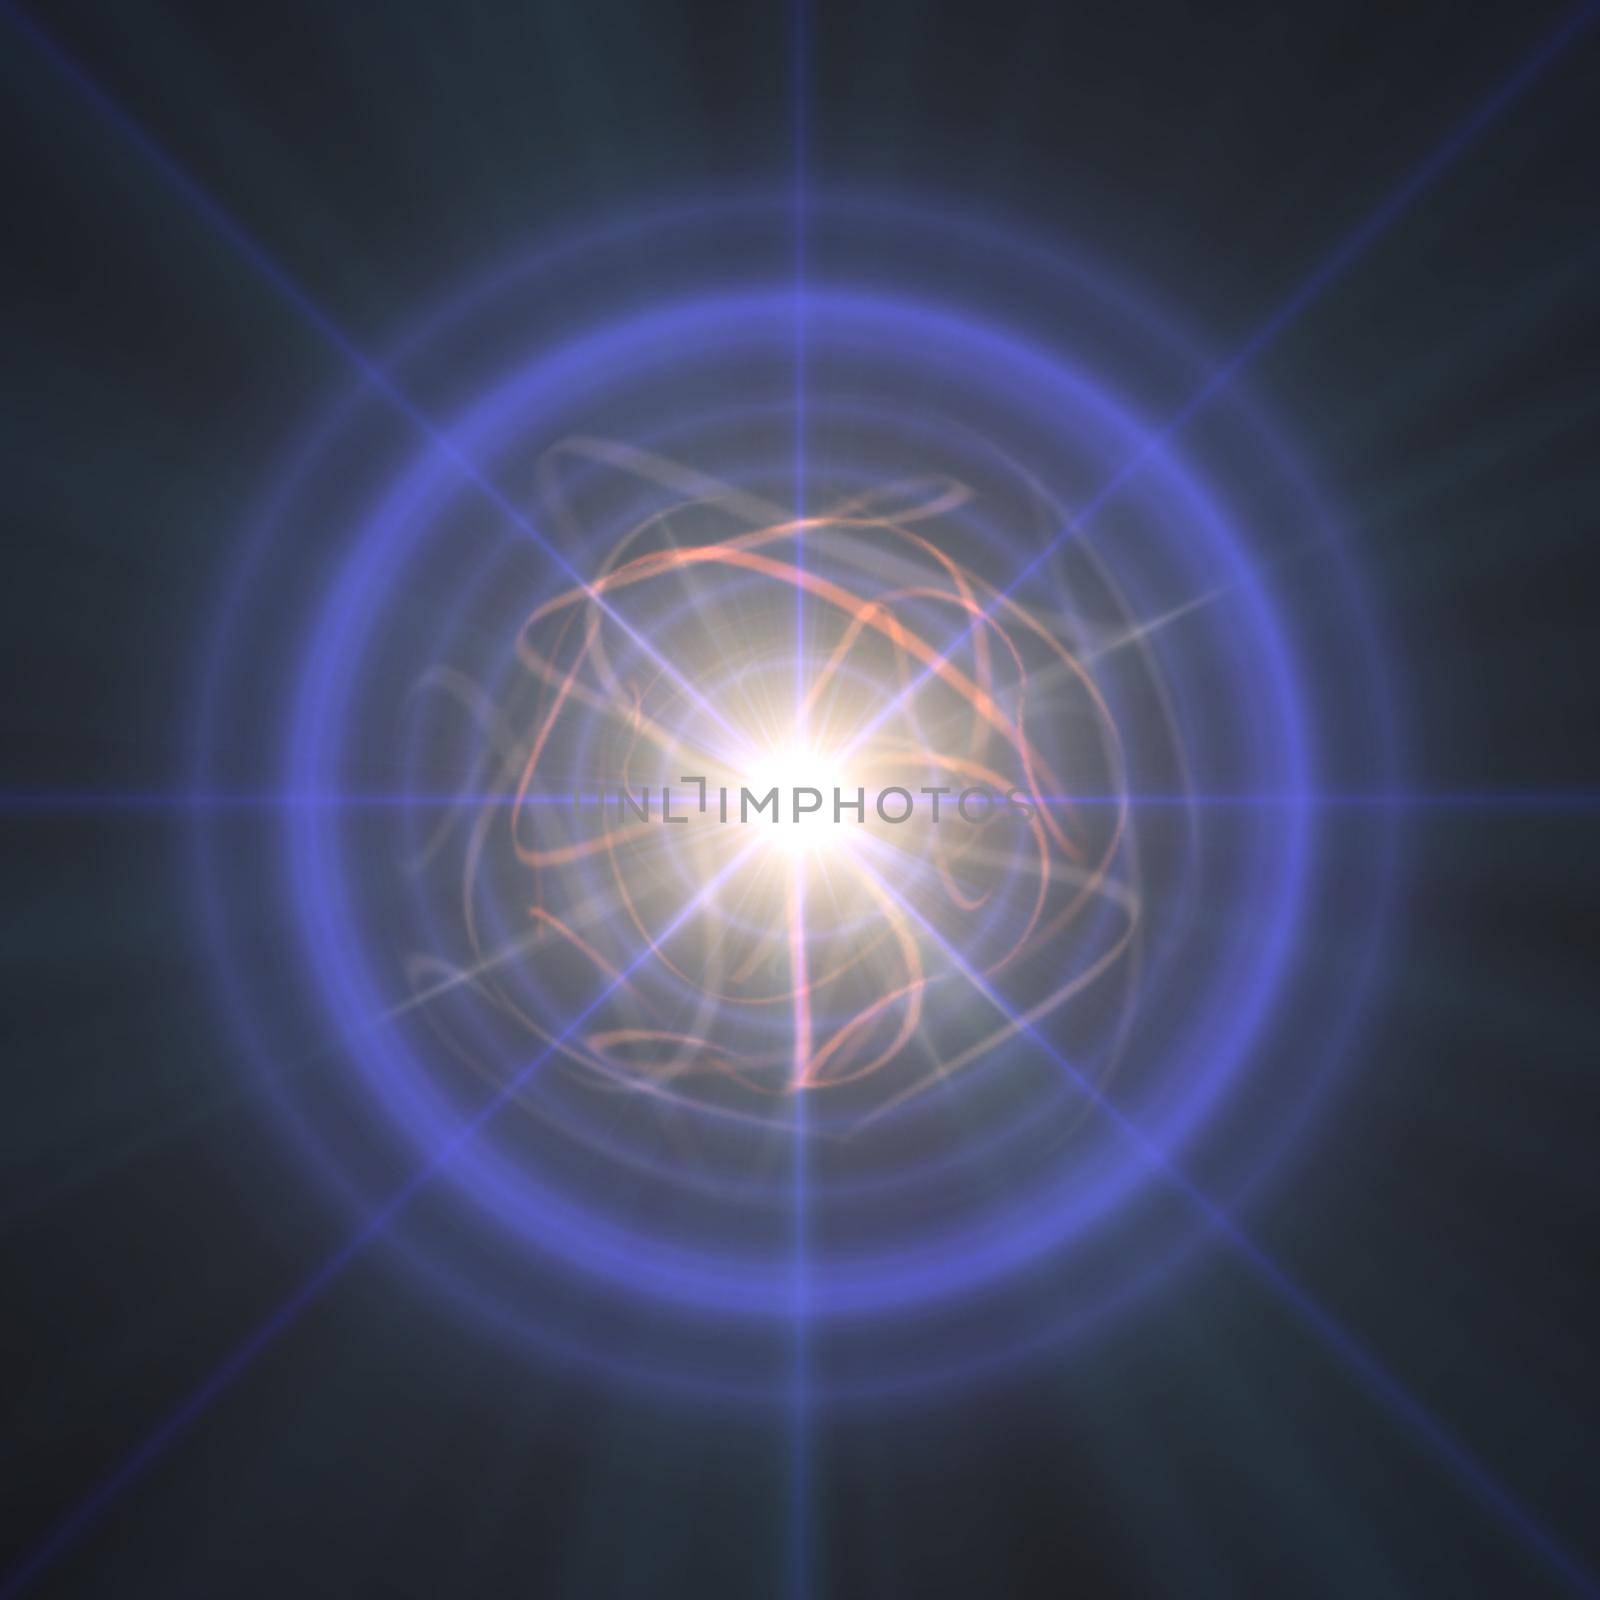 Highly magnetized rotating neutron star by alex_nako